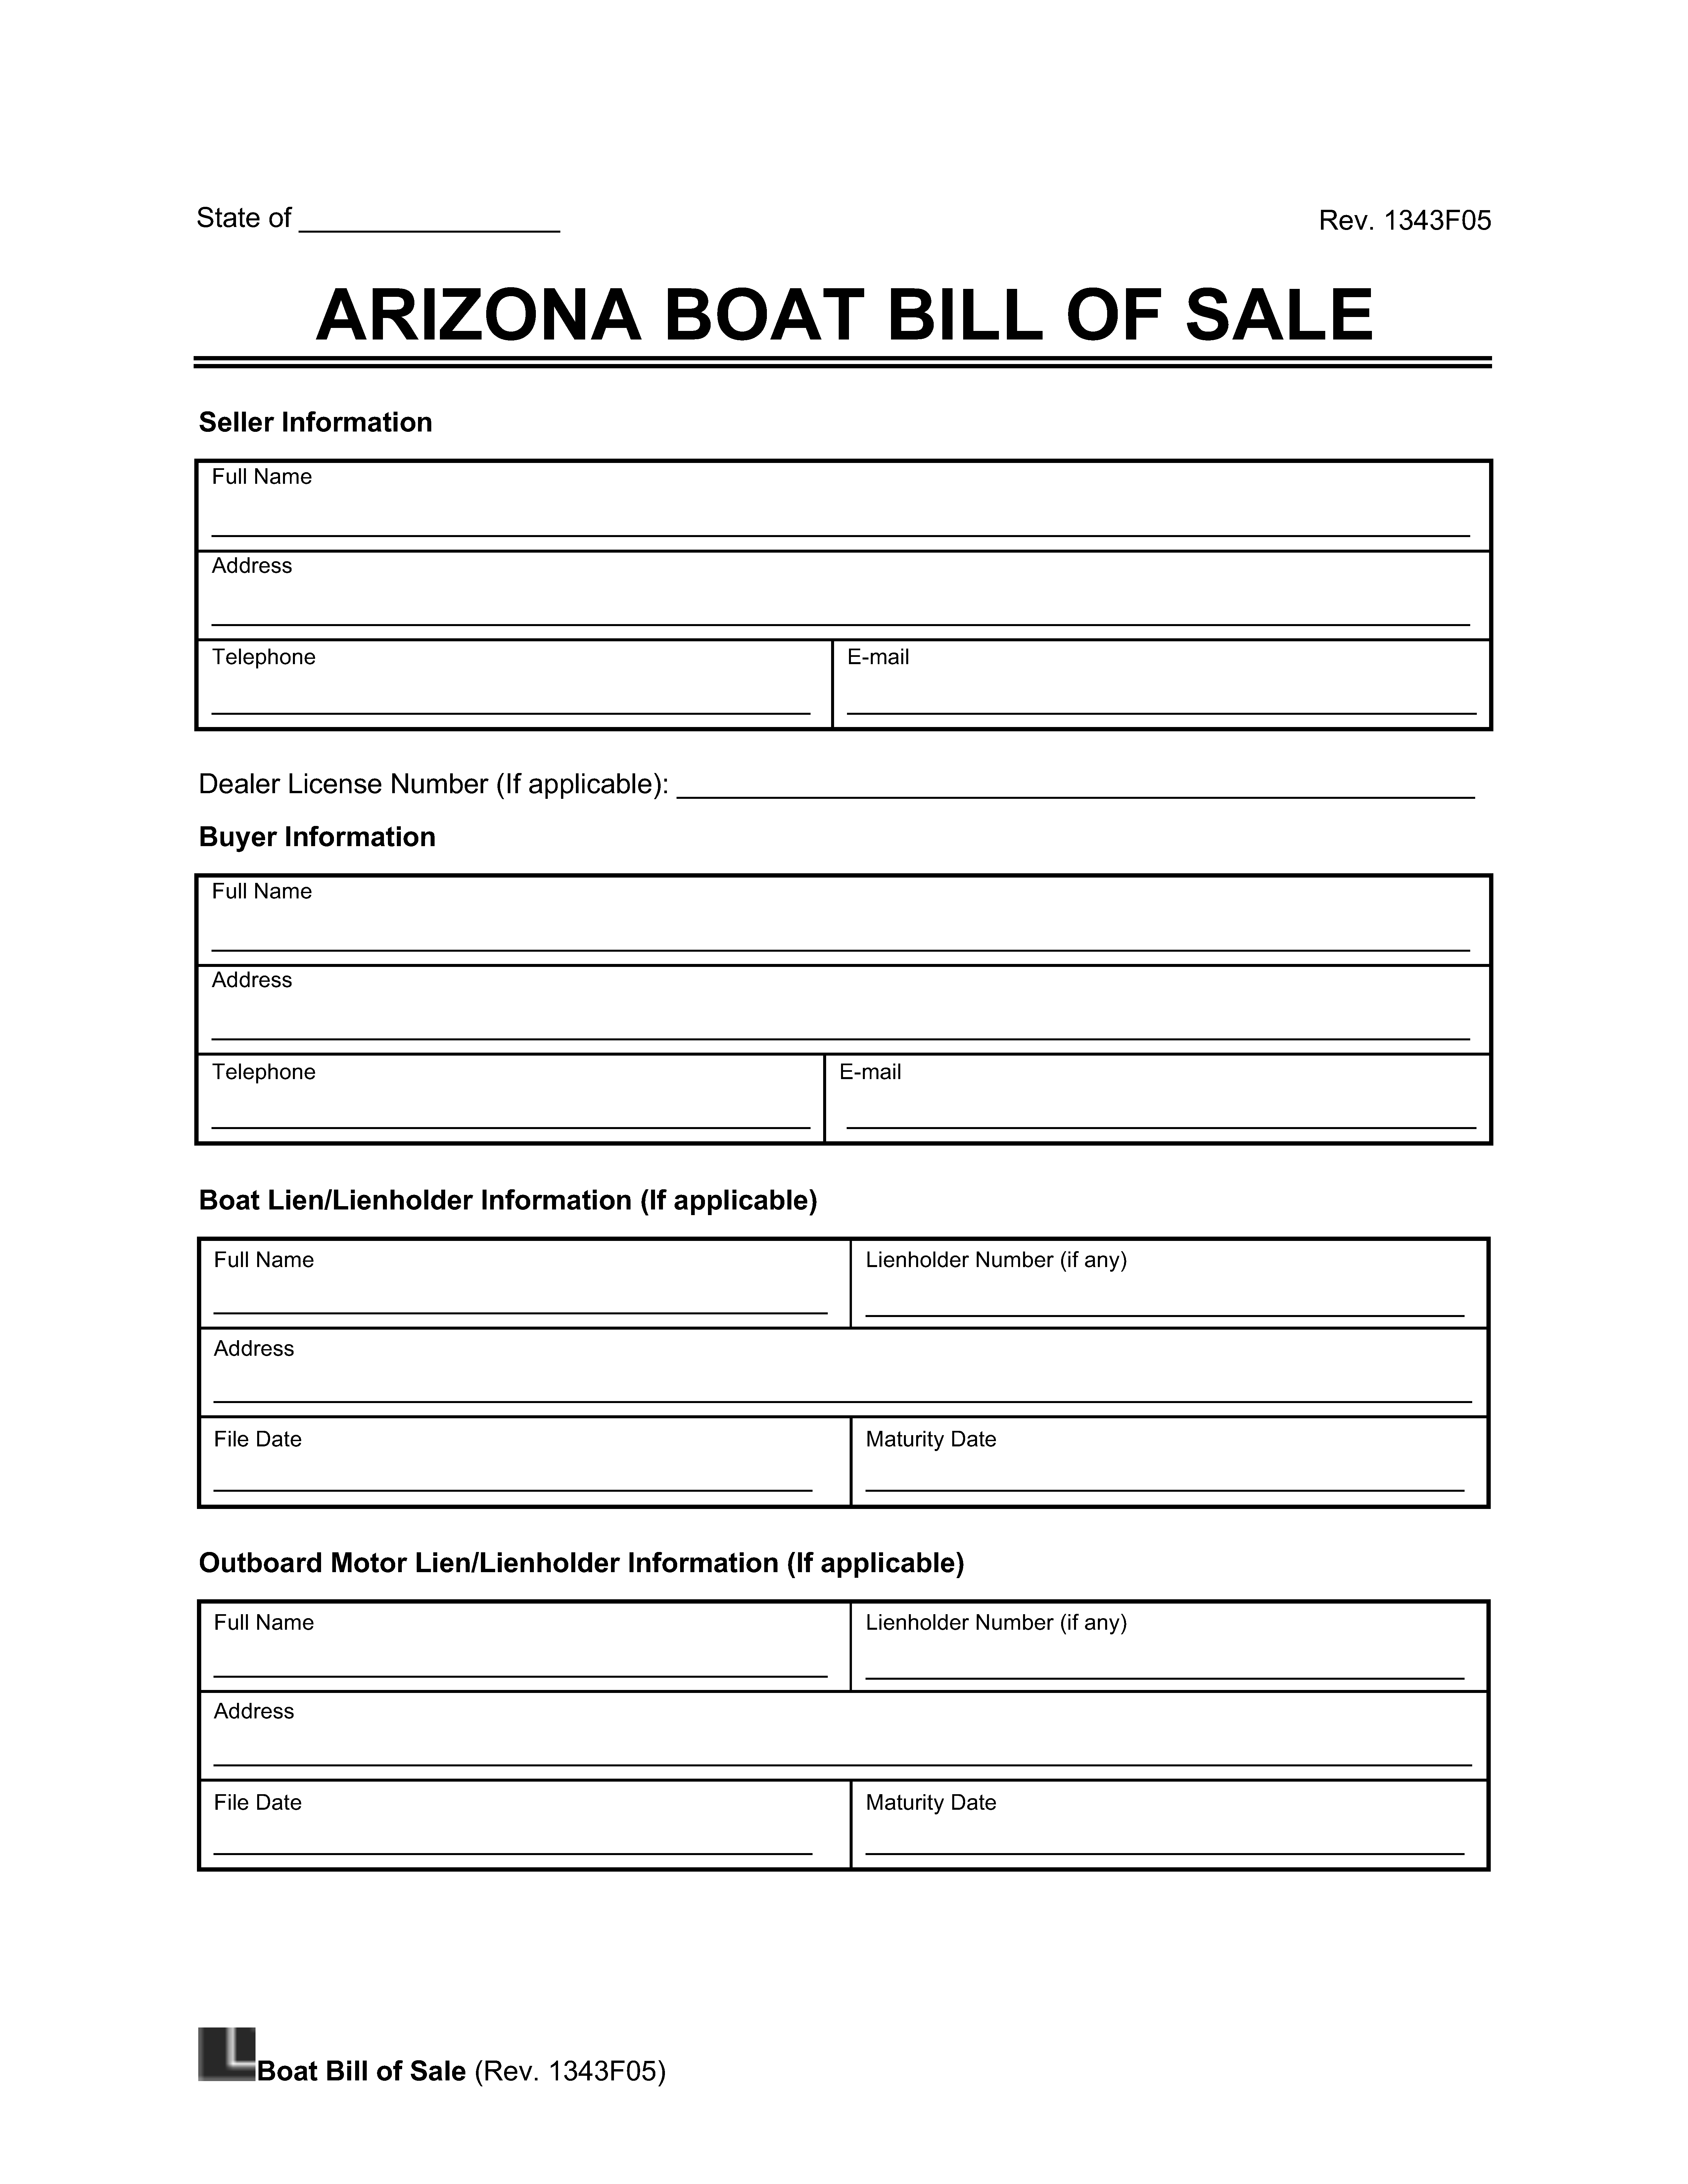 Arizona Boat Bill of Sale template